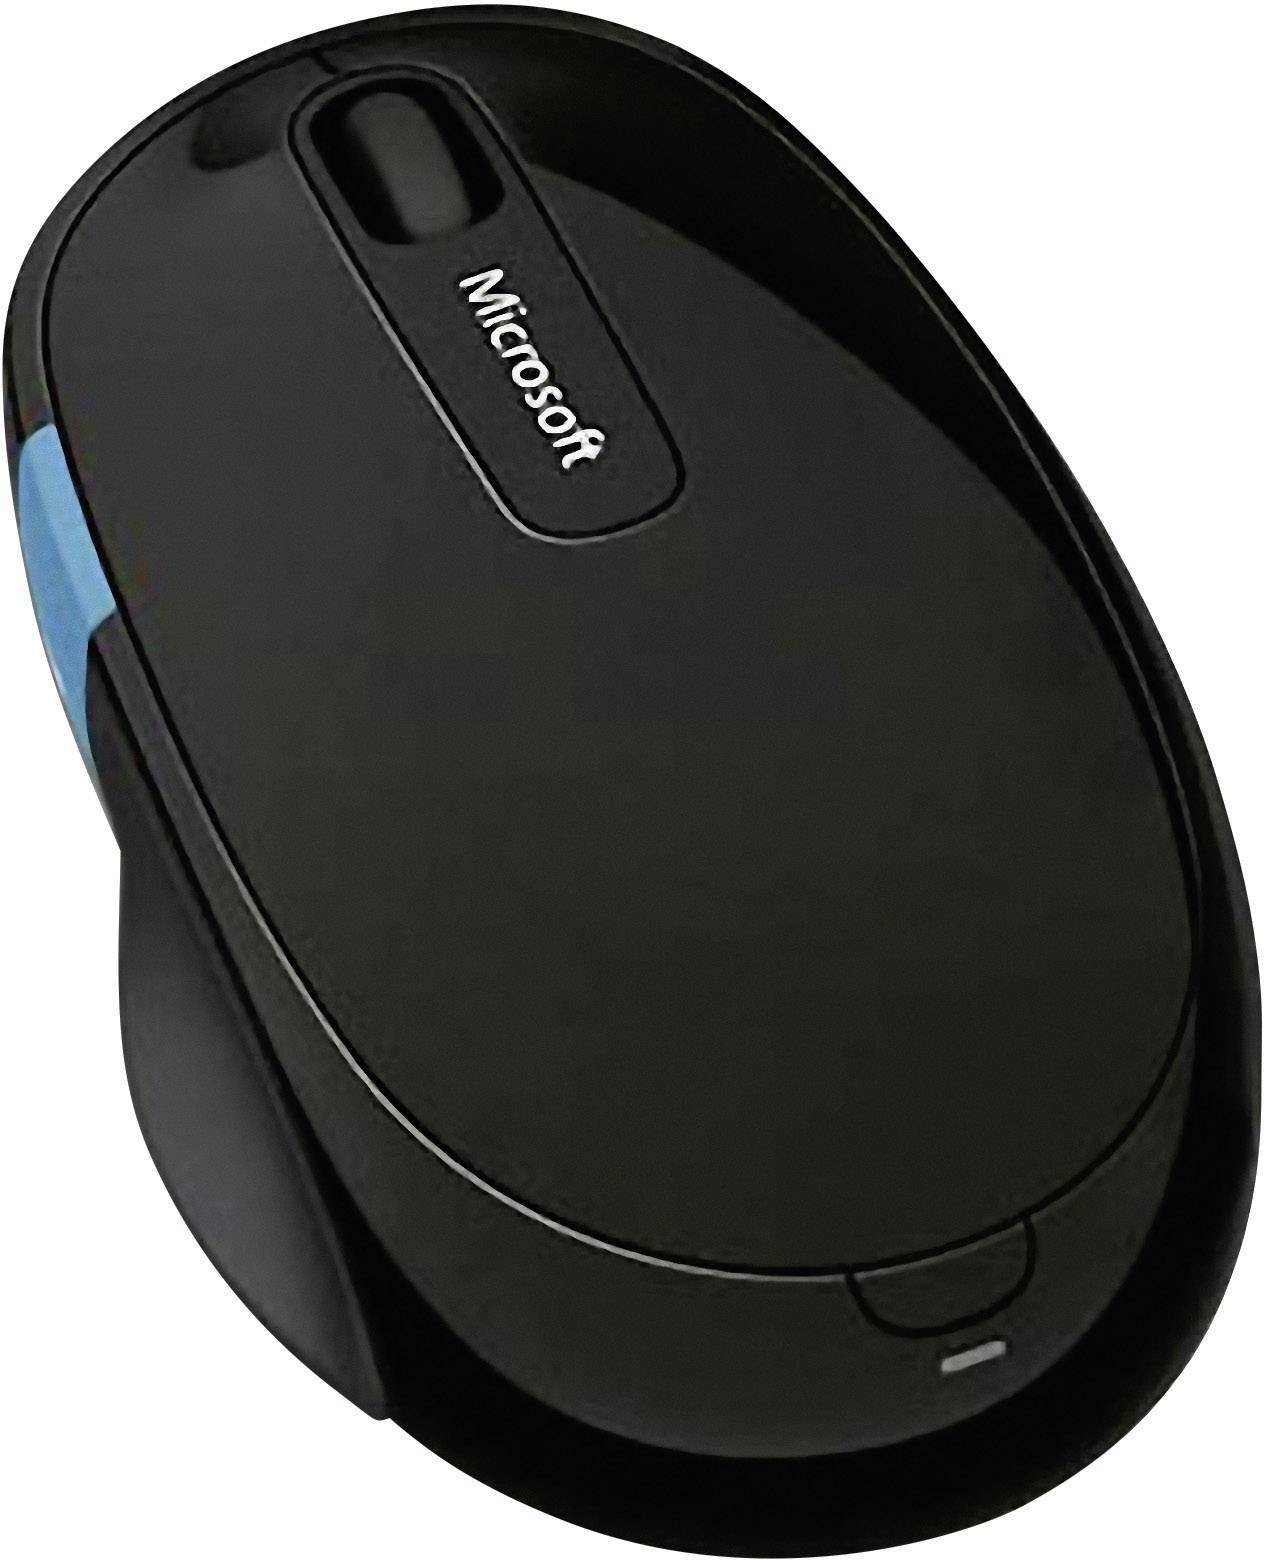 microsoft bluetooth mouse driver